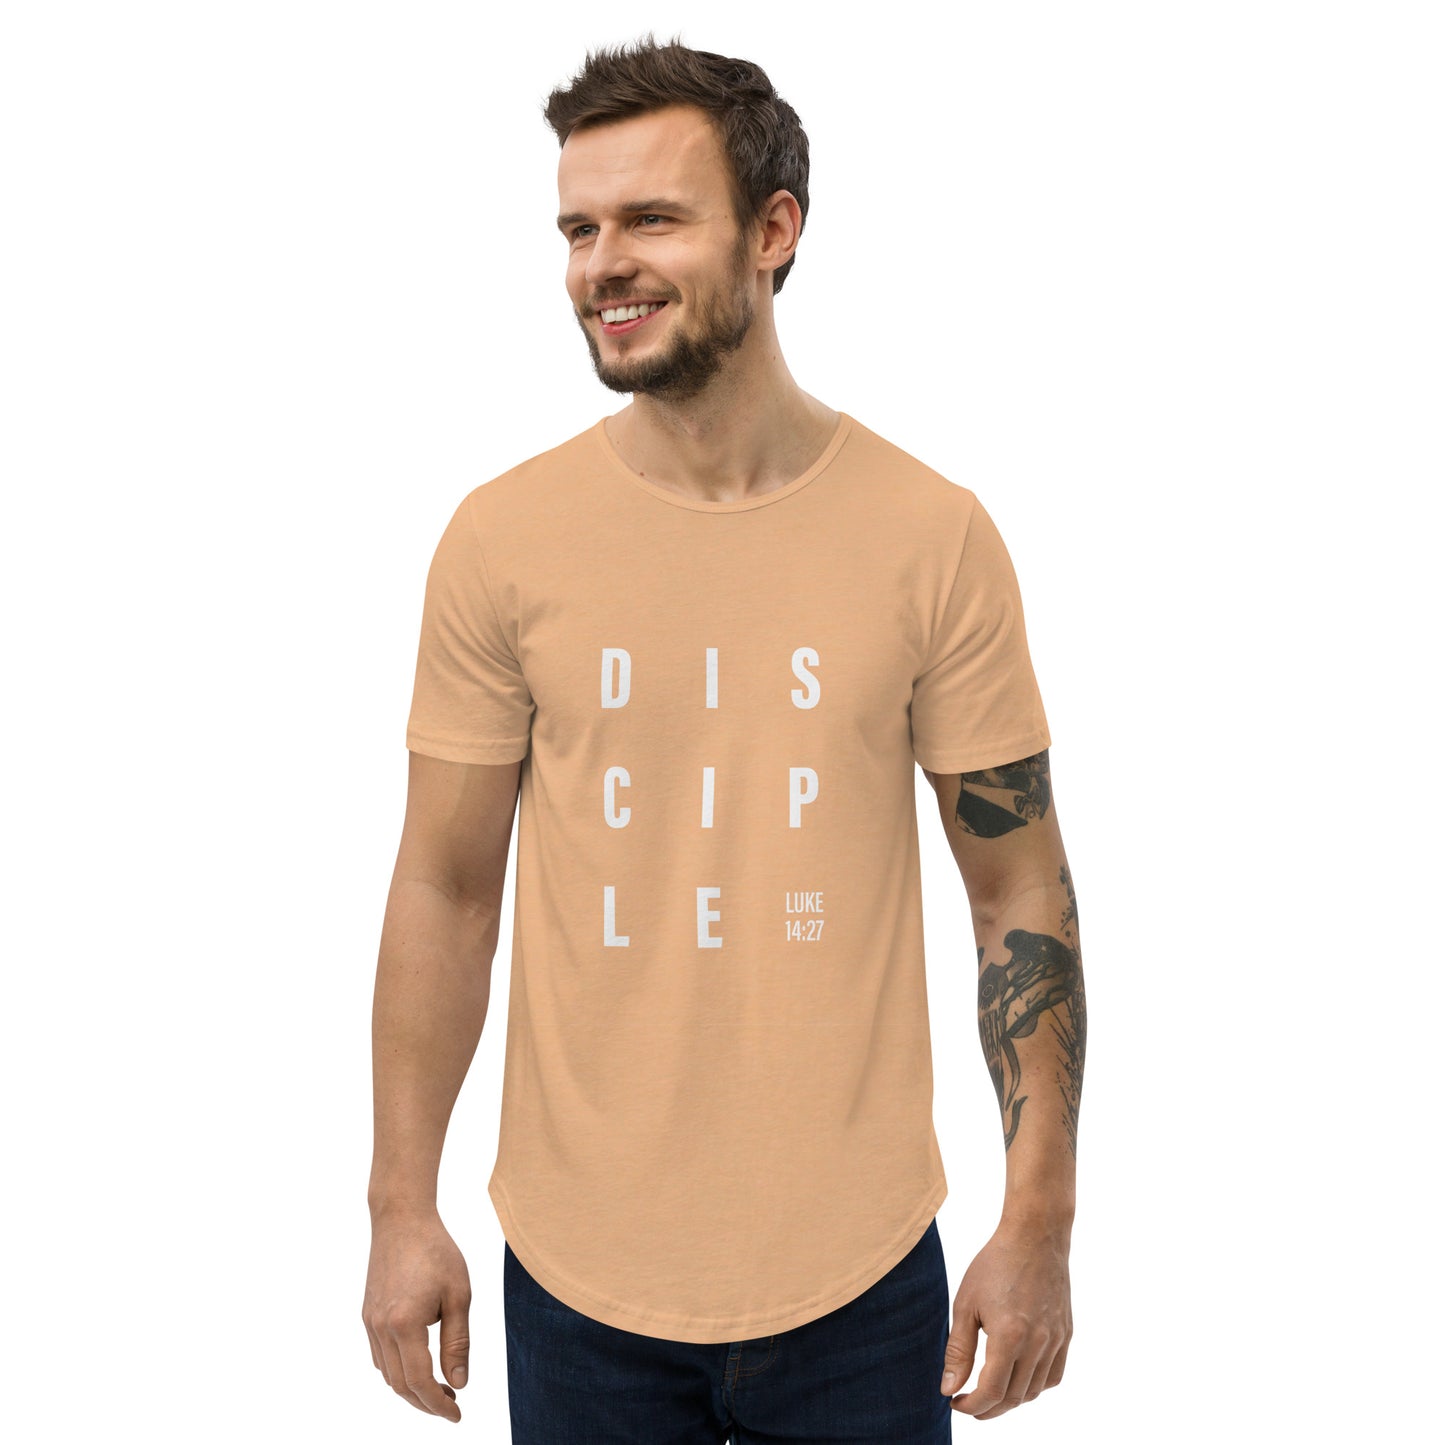 Disciple - Men's Curved T-Shirt